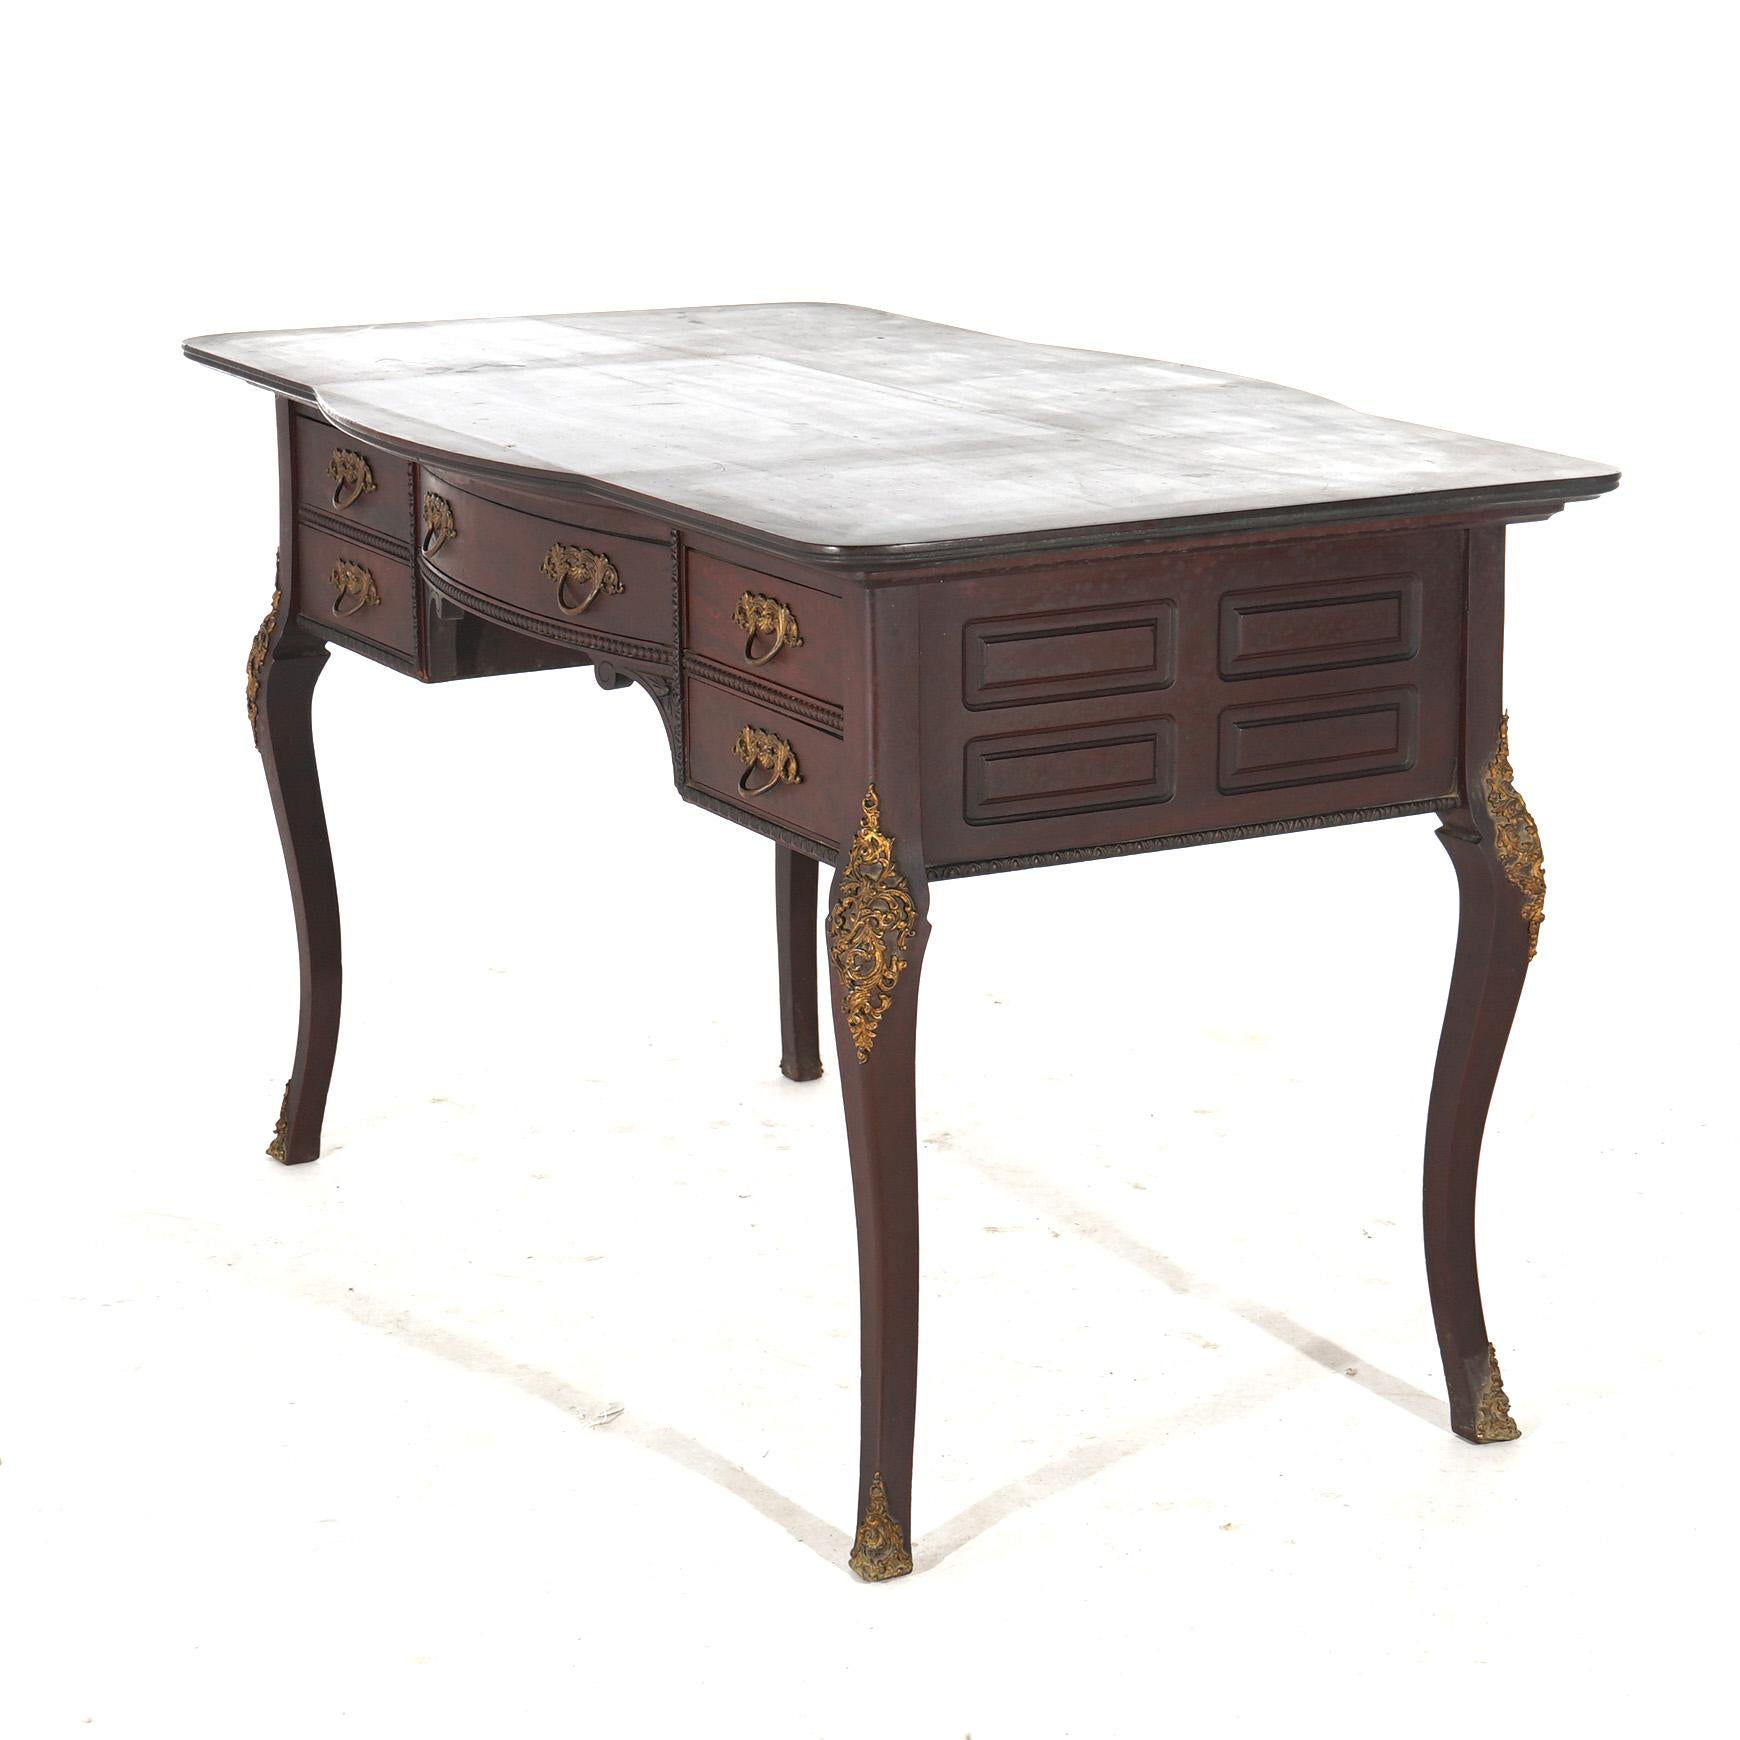 20th Century Antique French Mahogany & Ormolu Bureau Plat Writing Desk C1910